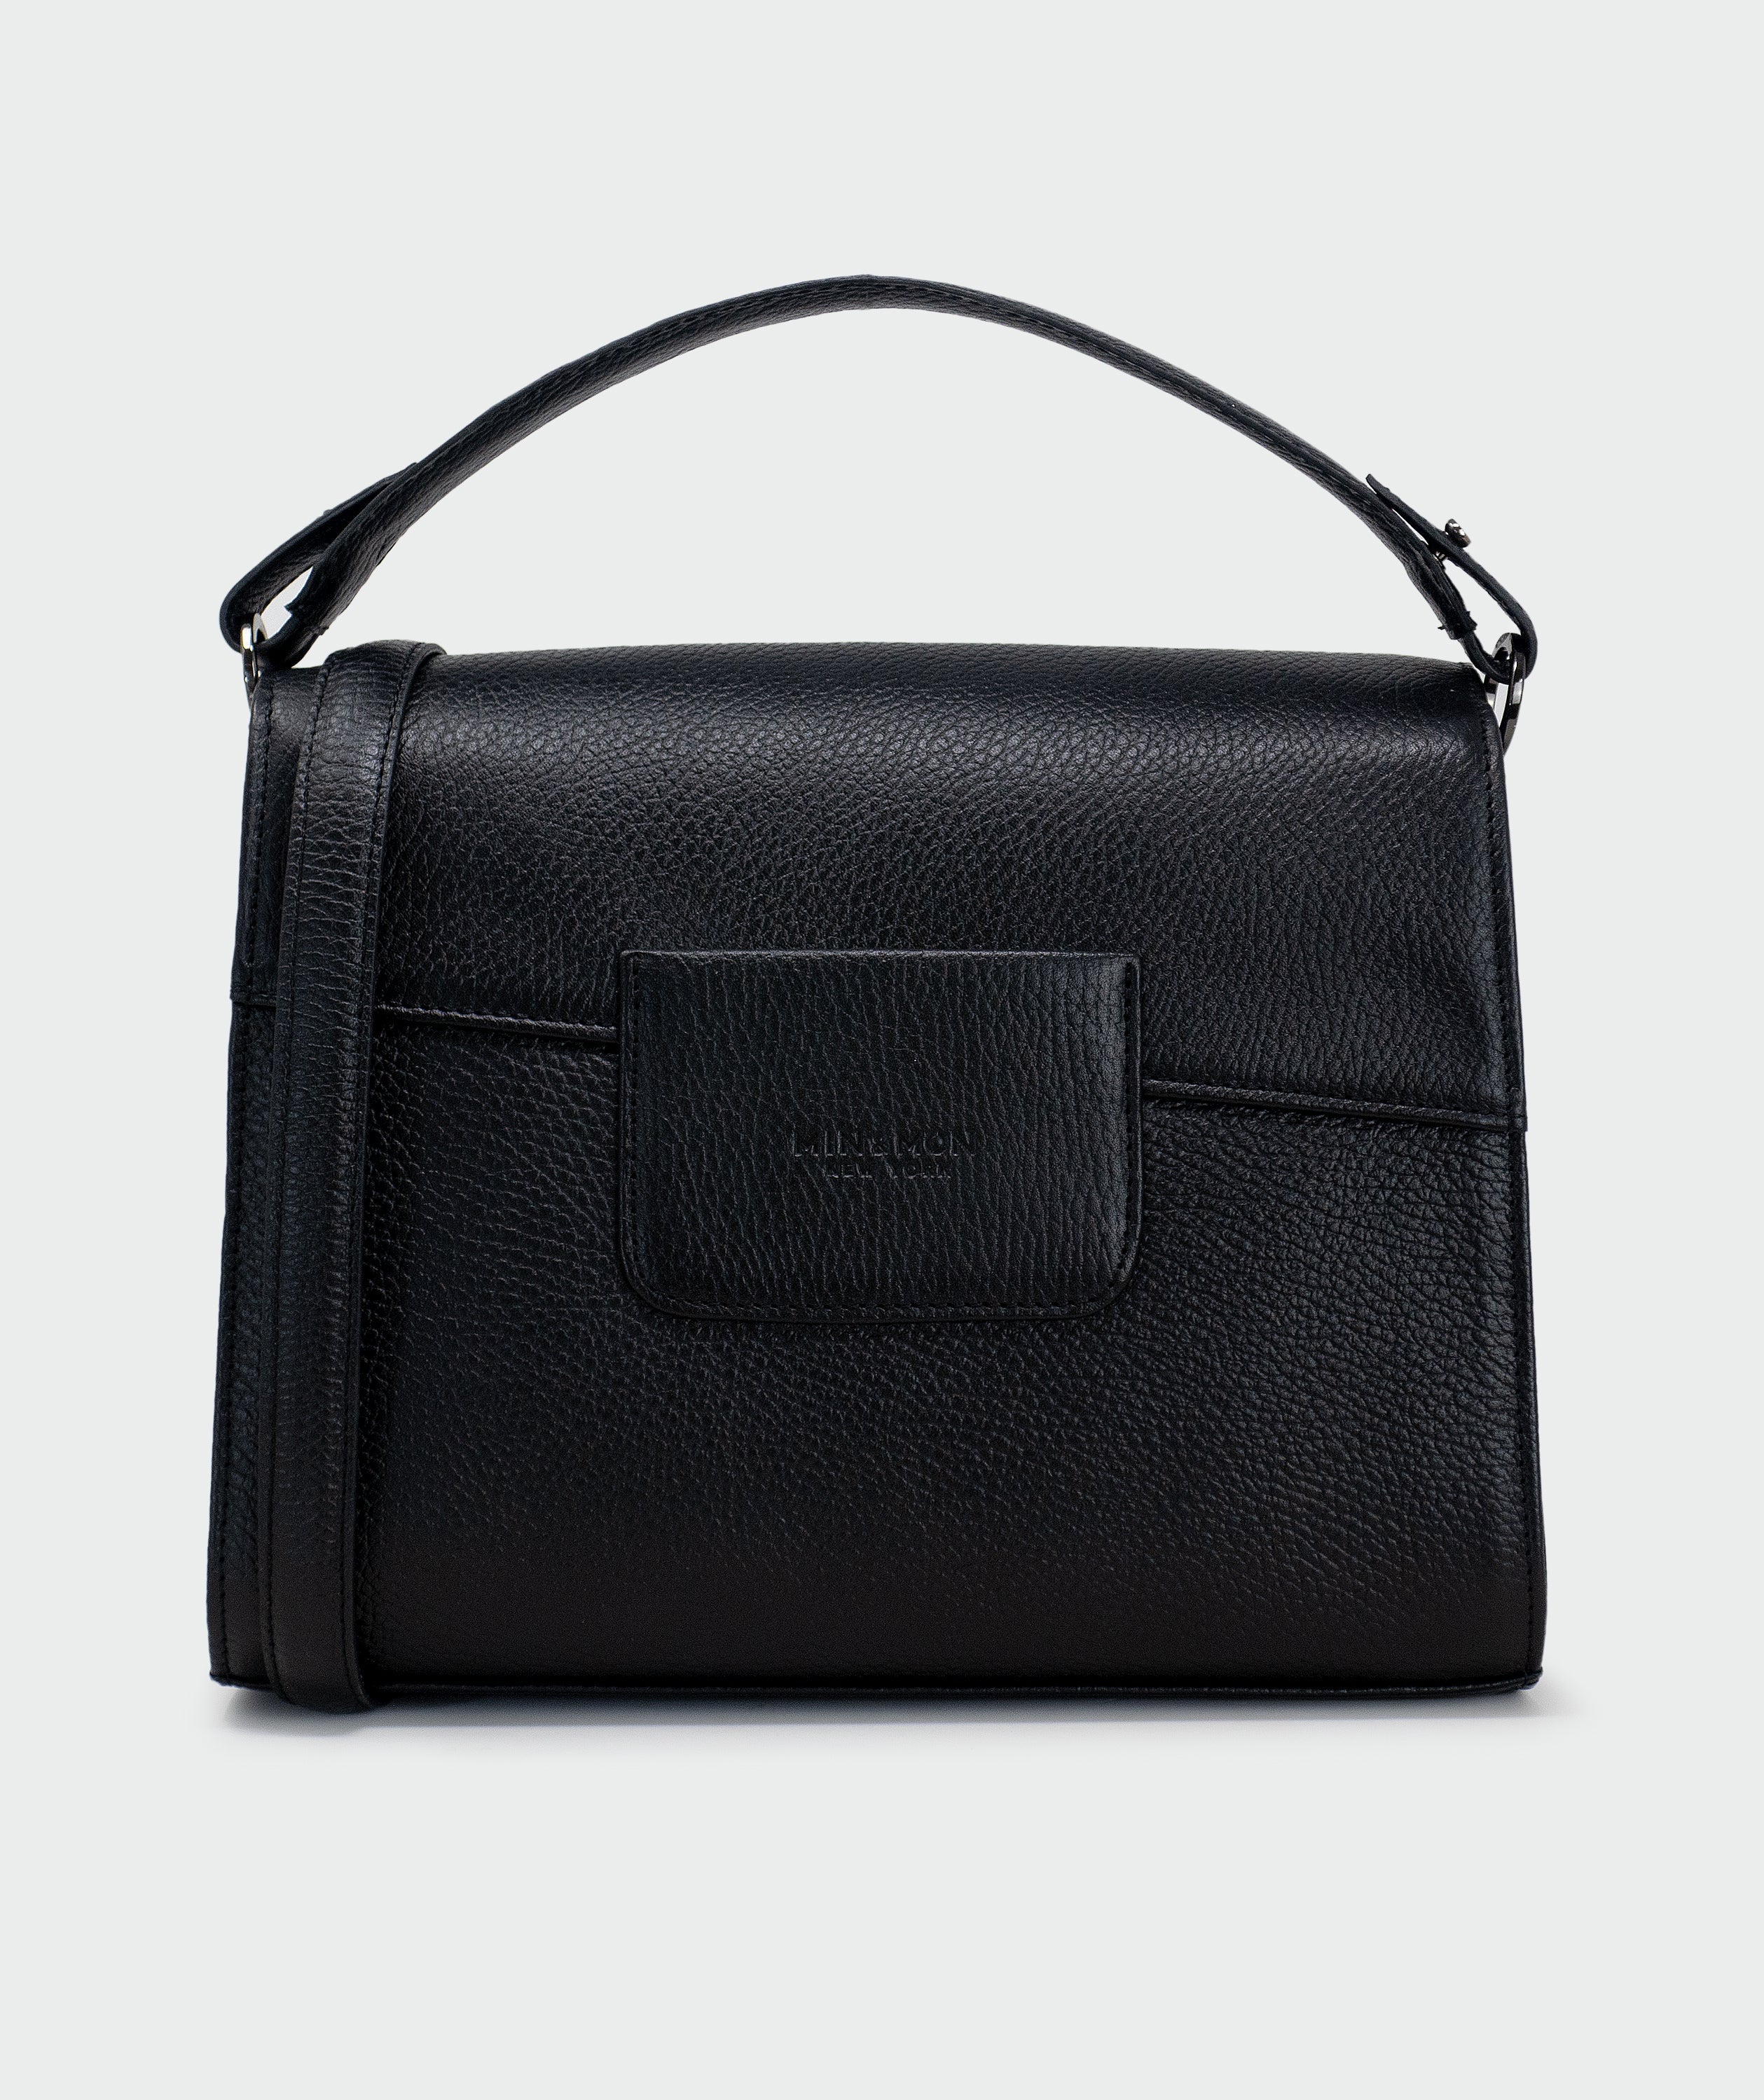 Anastasio Medium Crossbody Handbag Black Leather - Eyes Embroidery - Back view